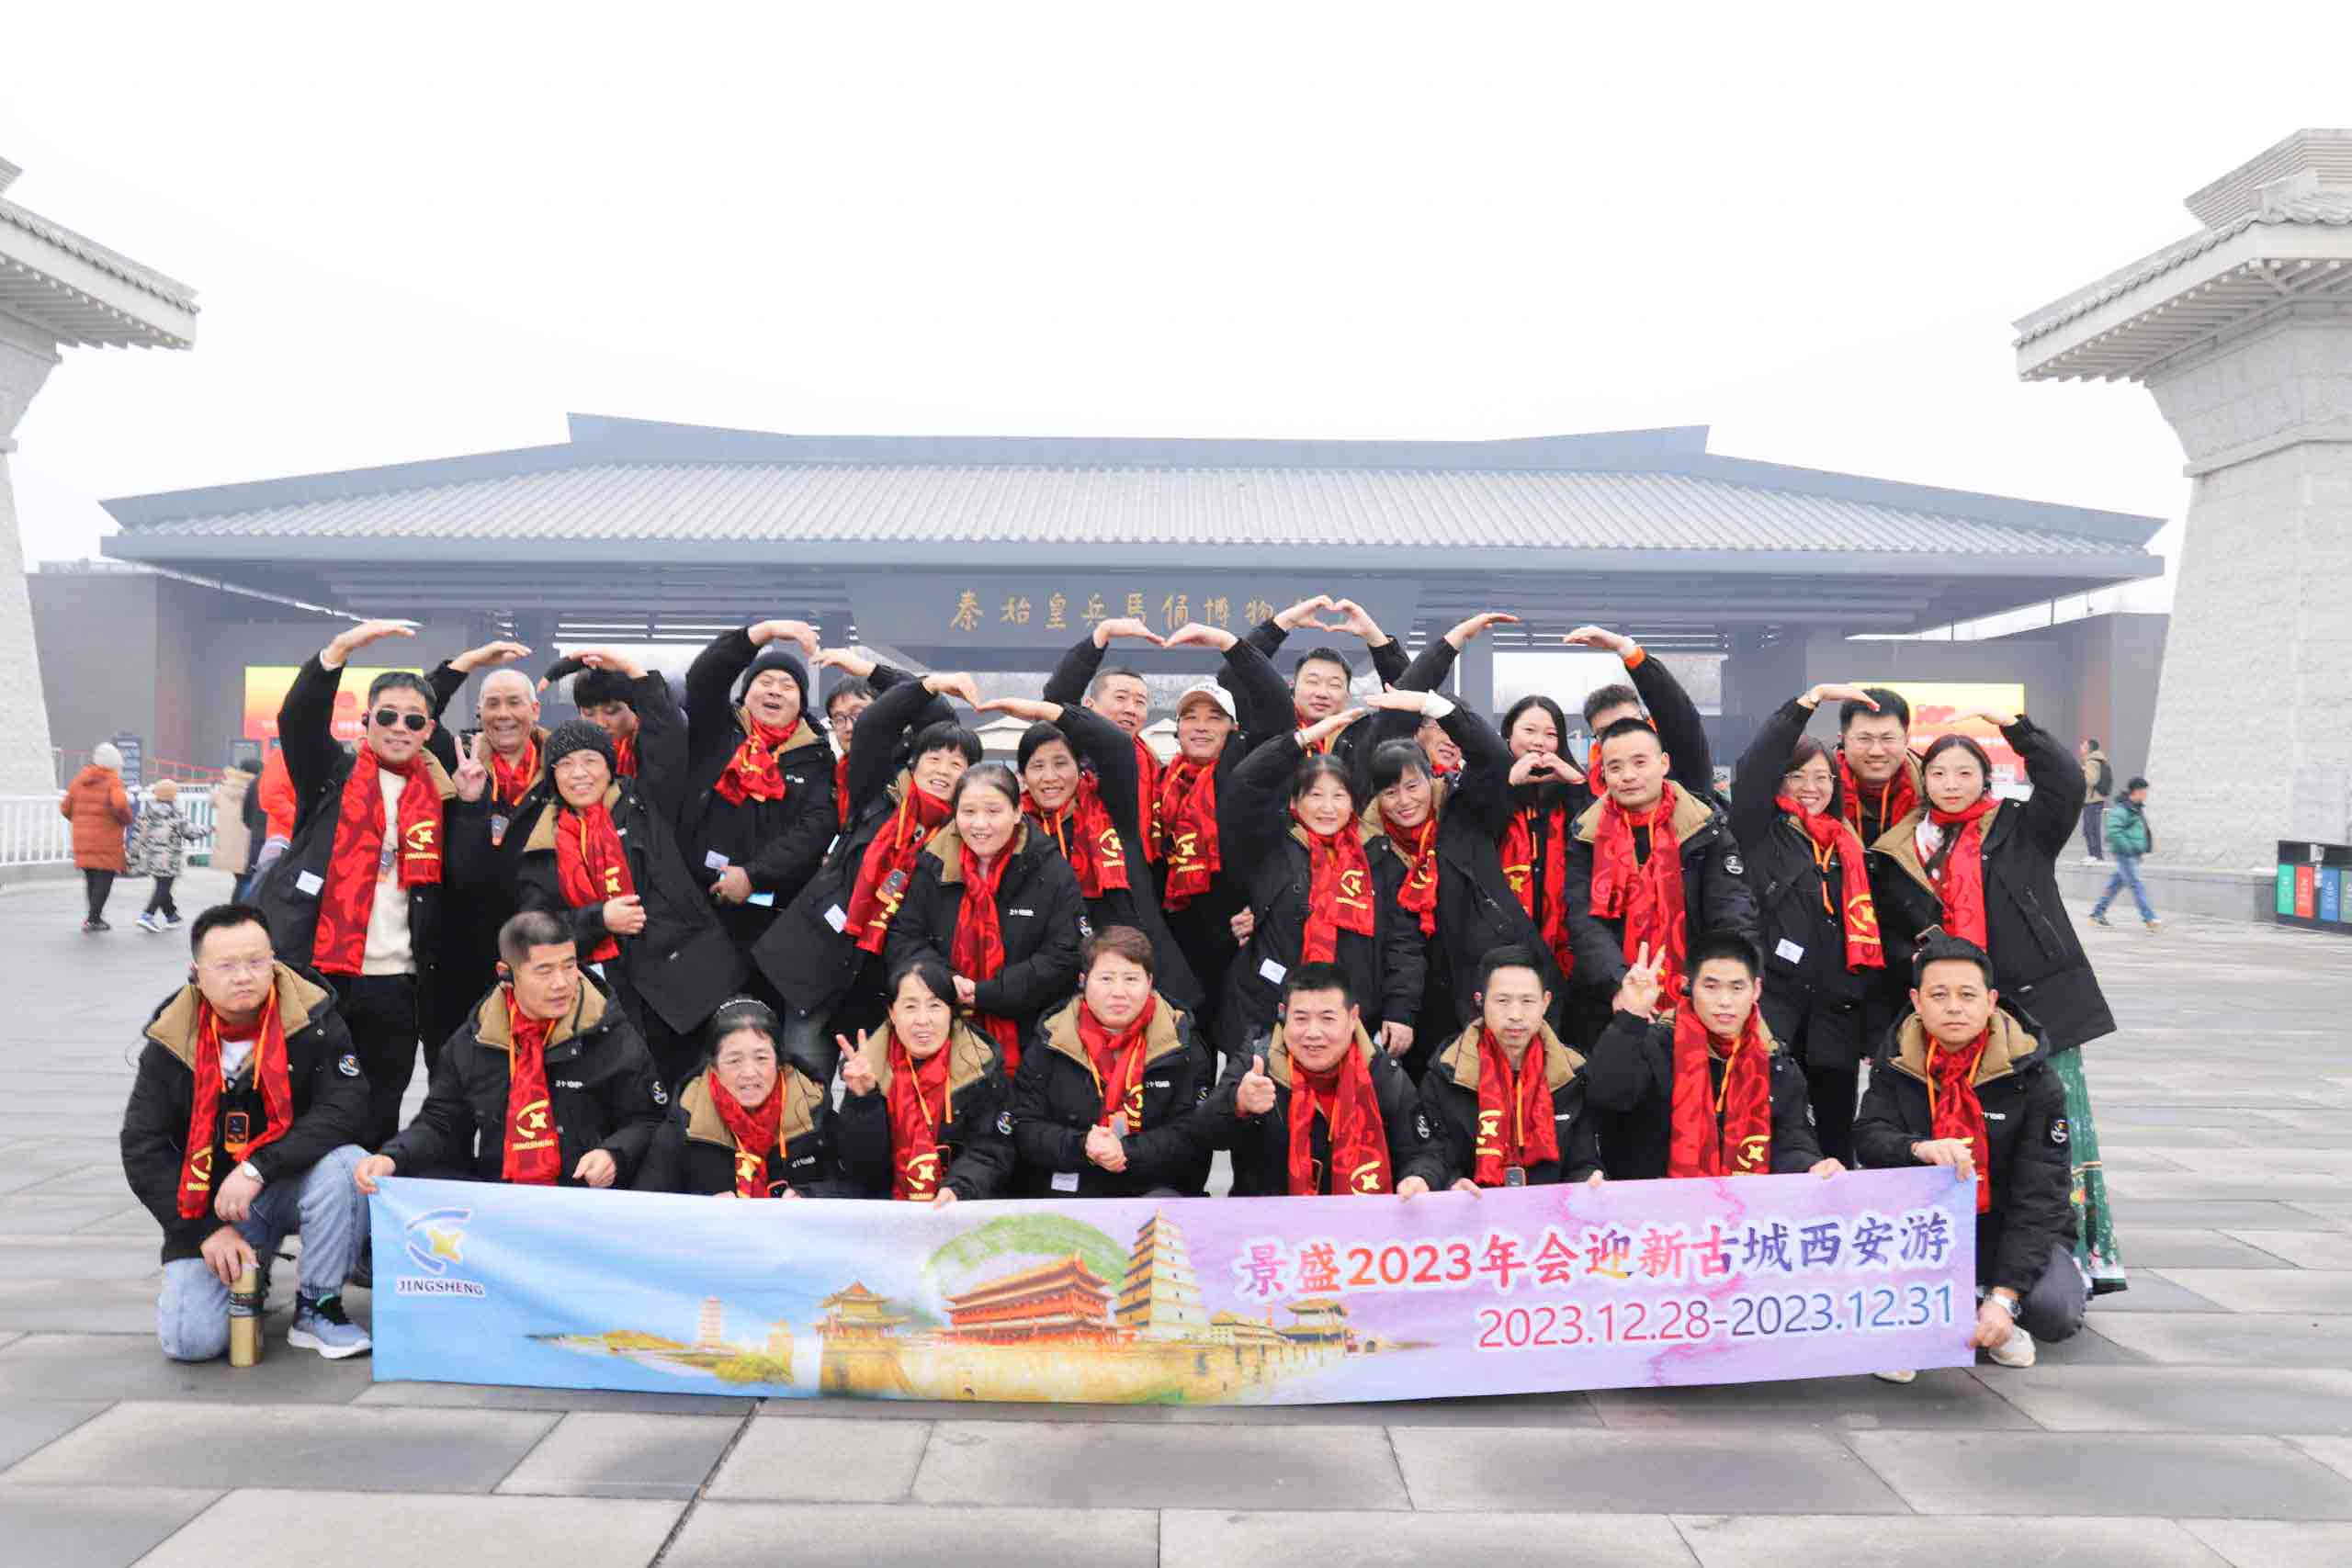 Company Employees Enjoy the Trip to Xi'an City